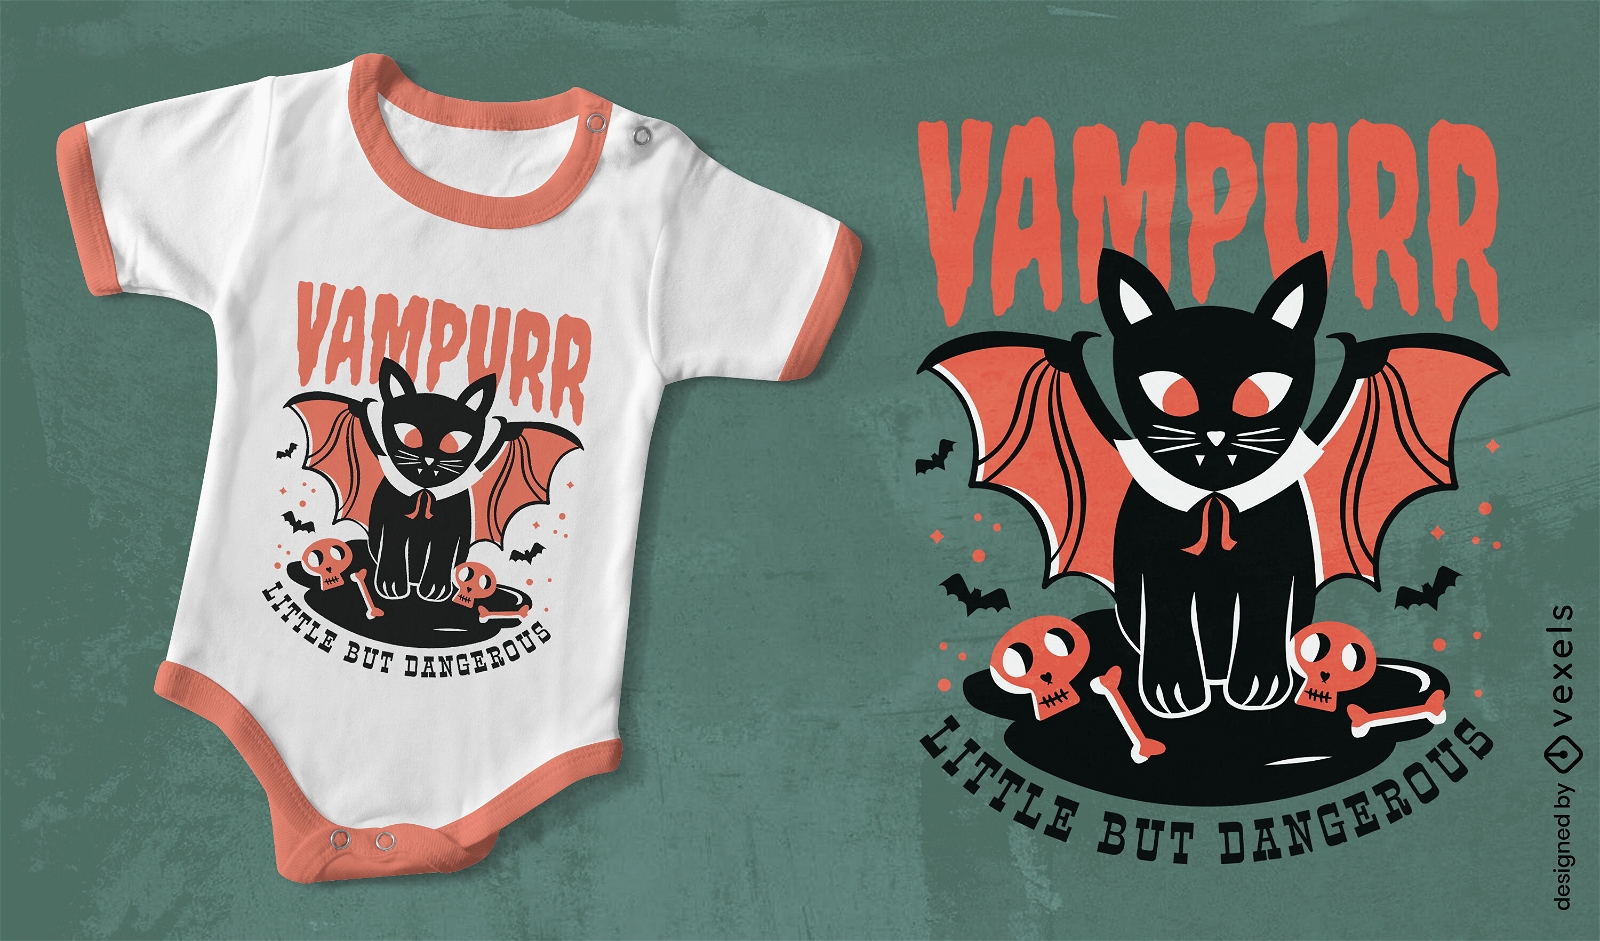 Vampire black cat t-shirt design